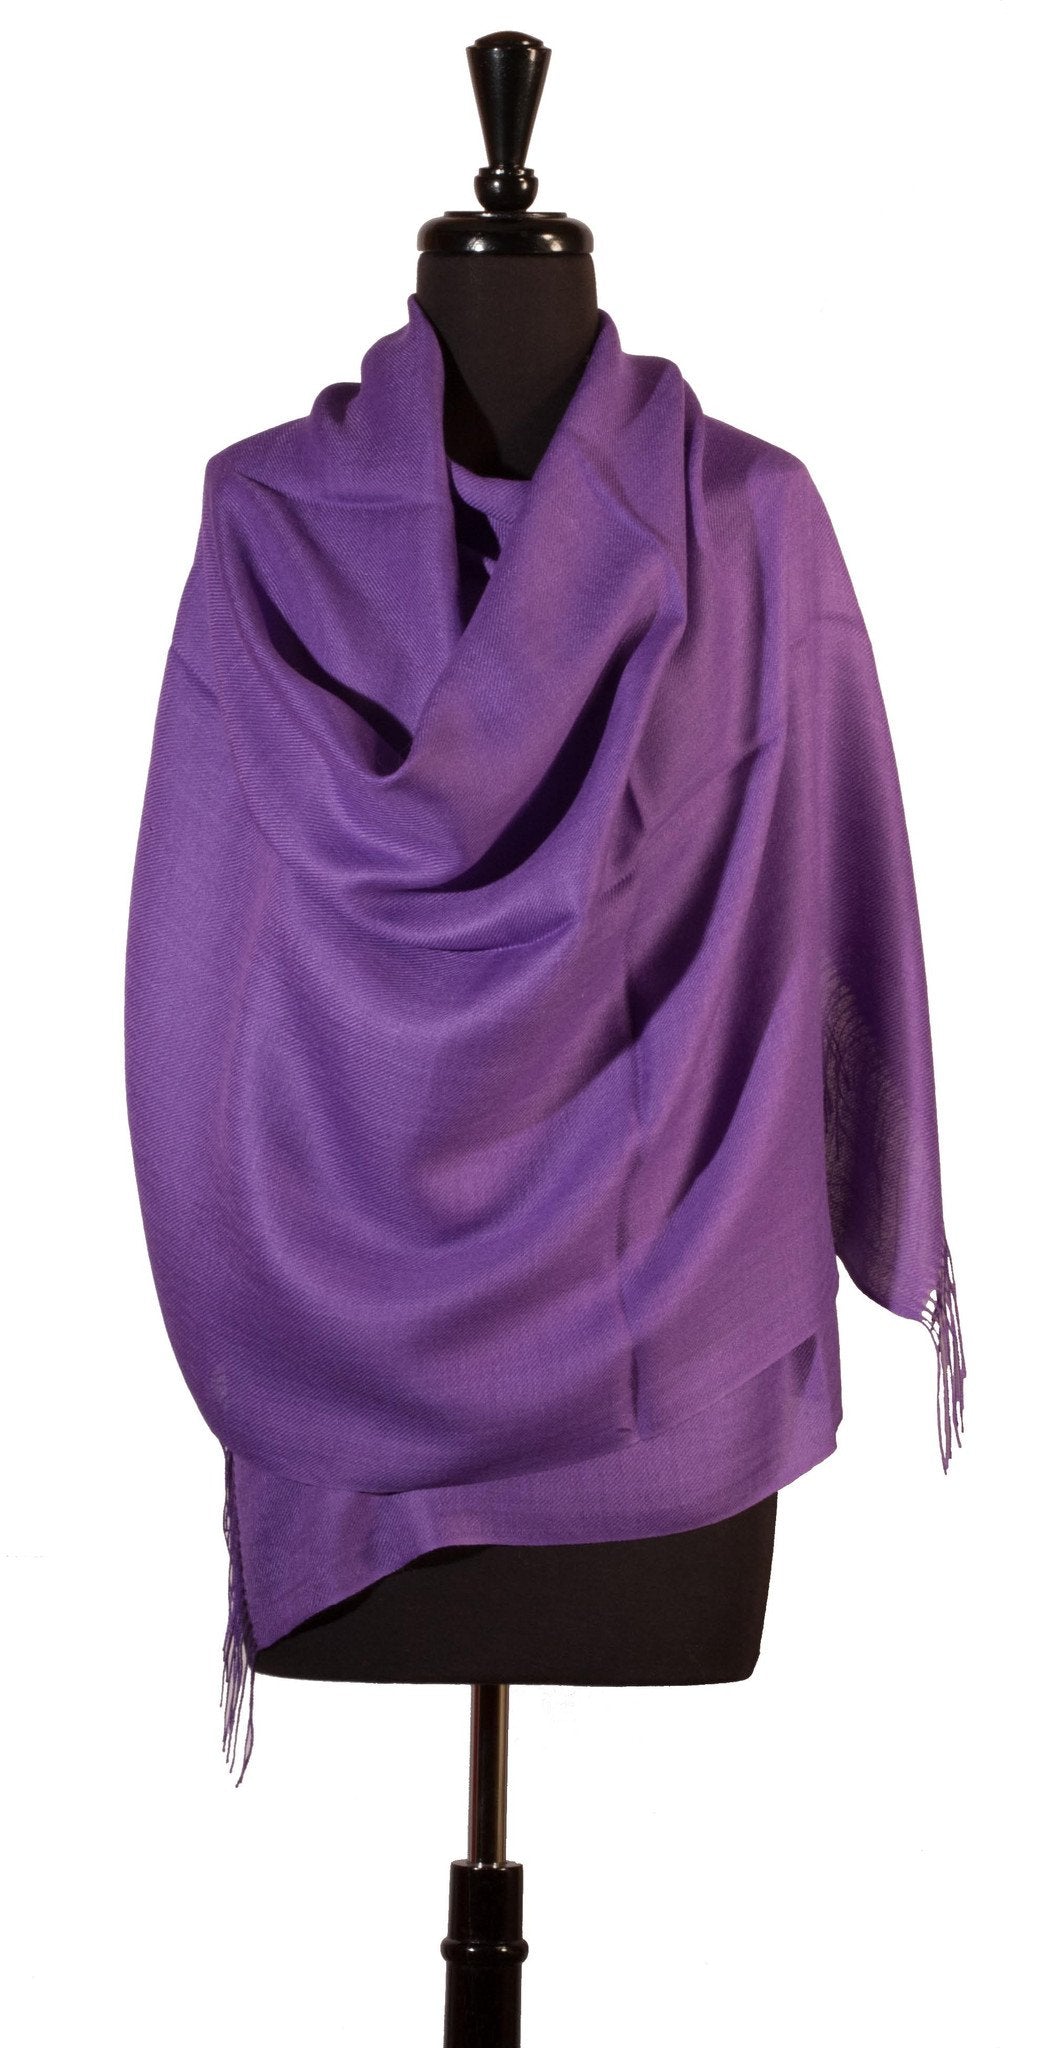 Baby Alpaca &amp; Silk Shawl in Solid Color - Amethyst Purple - Qinti - The Peruvian Shop